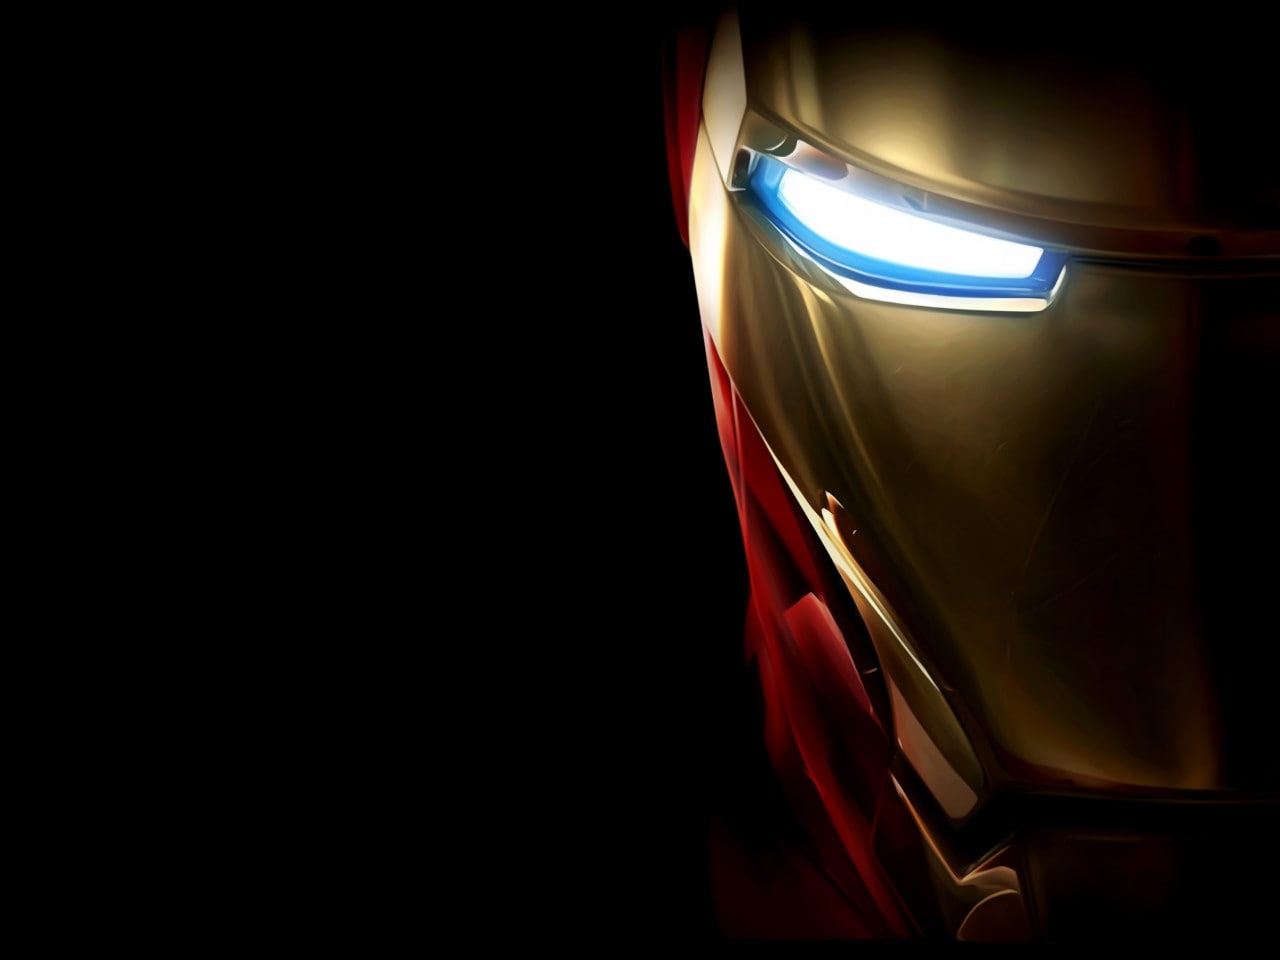 Iron Man wallpaper, Marvel Cinematic Universe, movies, lighting equipment